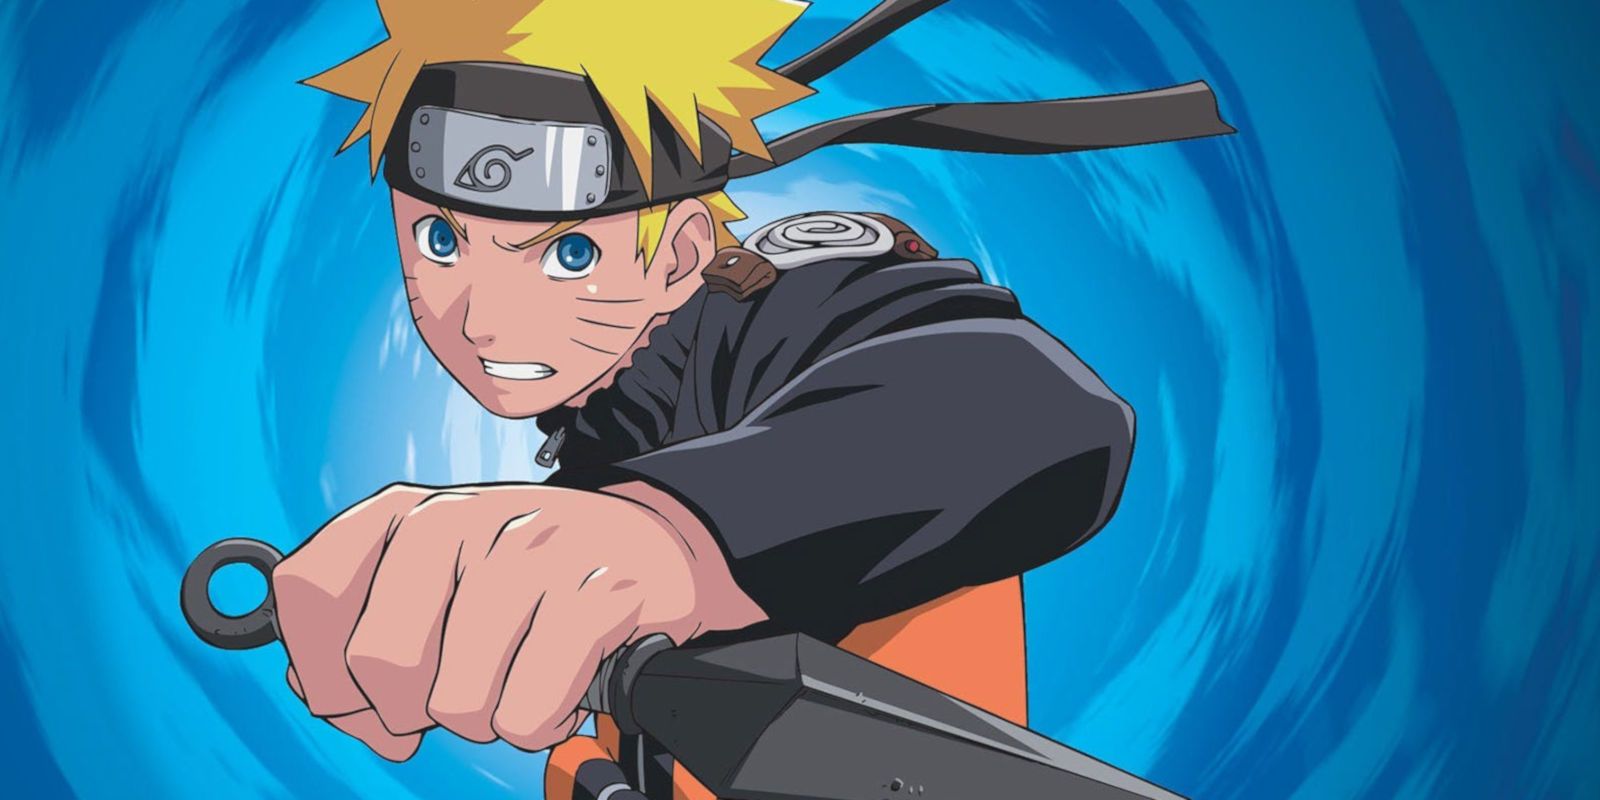 Naruto Uzumaki brandishes a Kunai knife against a blue background